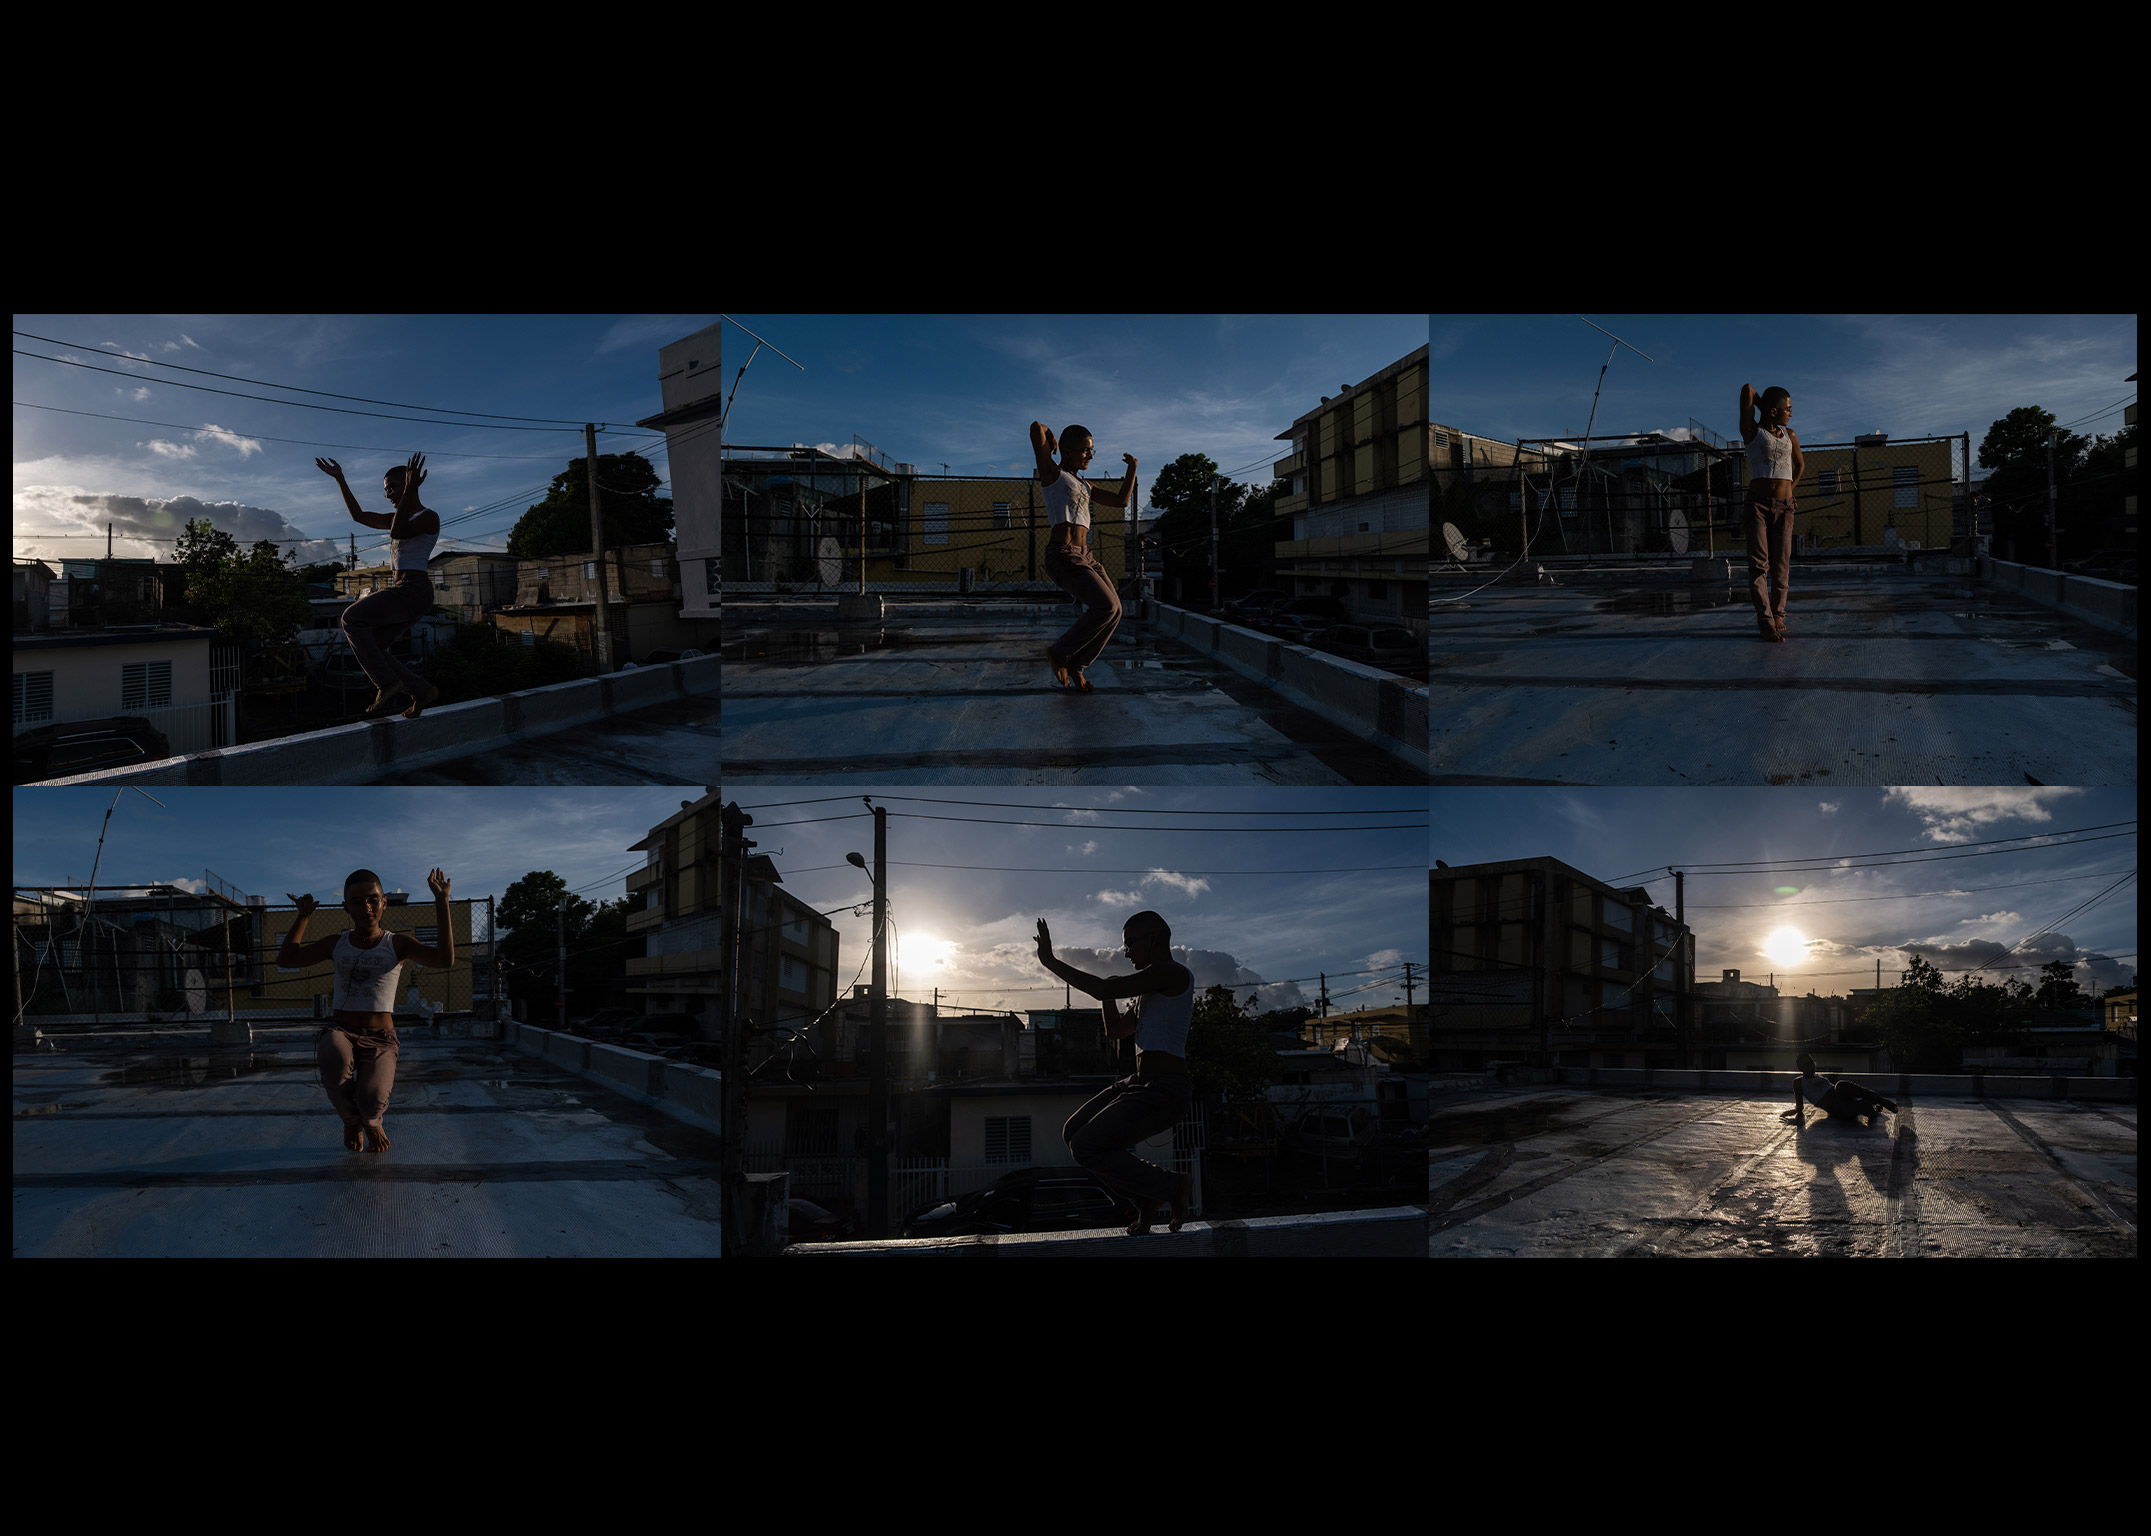 Beibijavi, 22, practices voguing on the rooftop of their neighbors’ apartment in Rio Piedras, San Juan, Puerto Rico. (Gabriella N. Báez—Magnum Foundation)